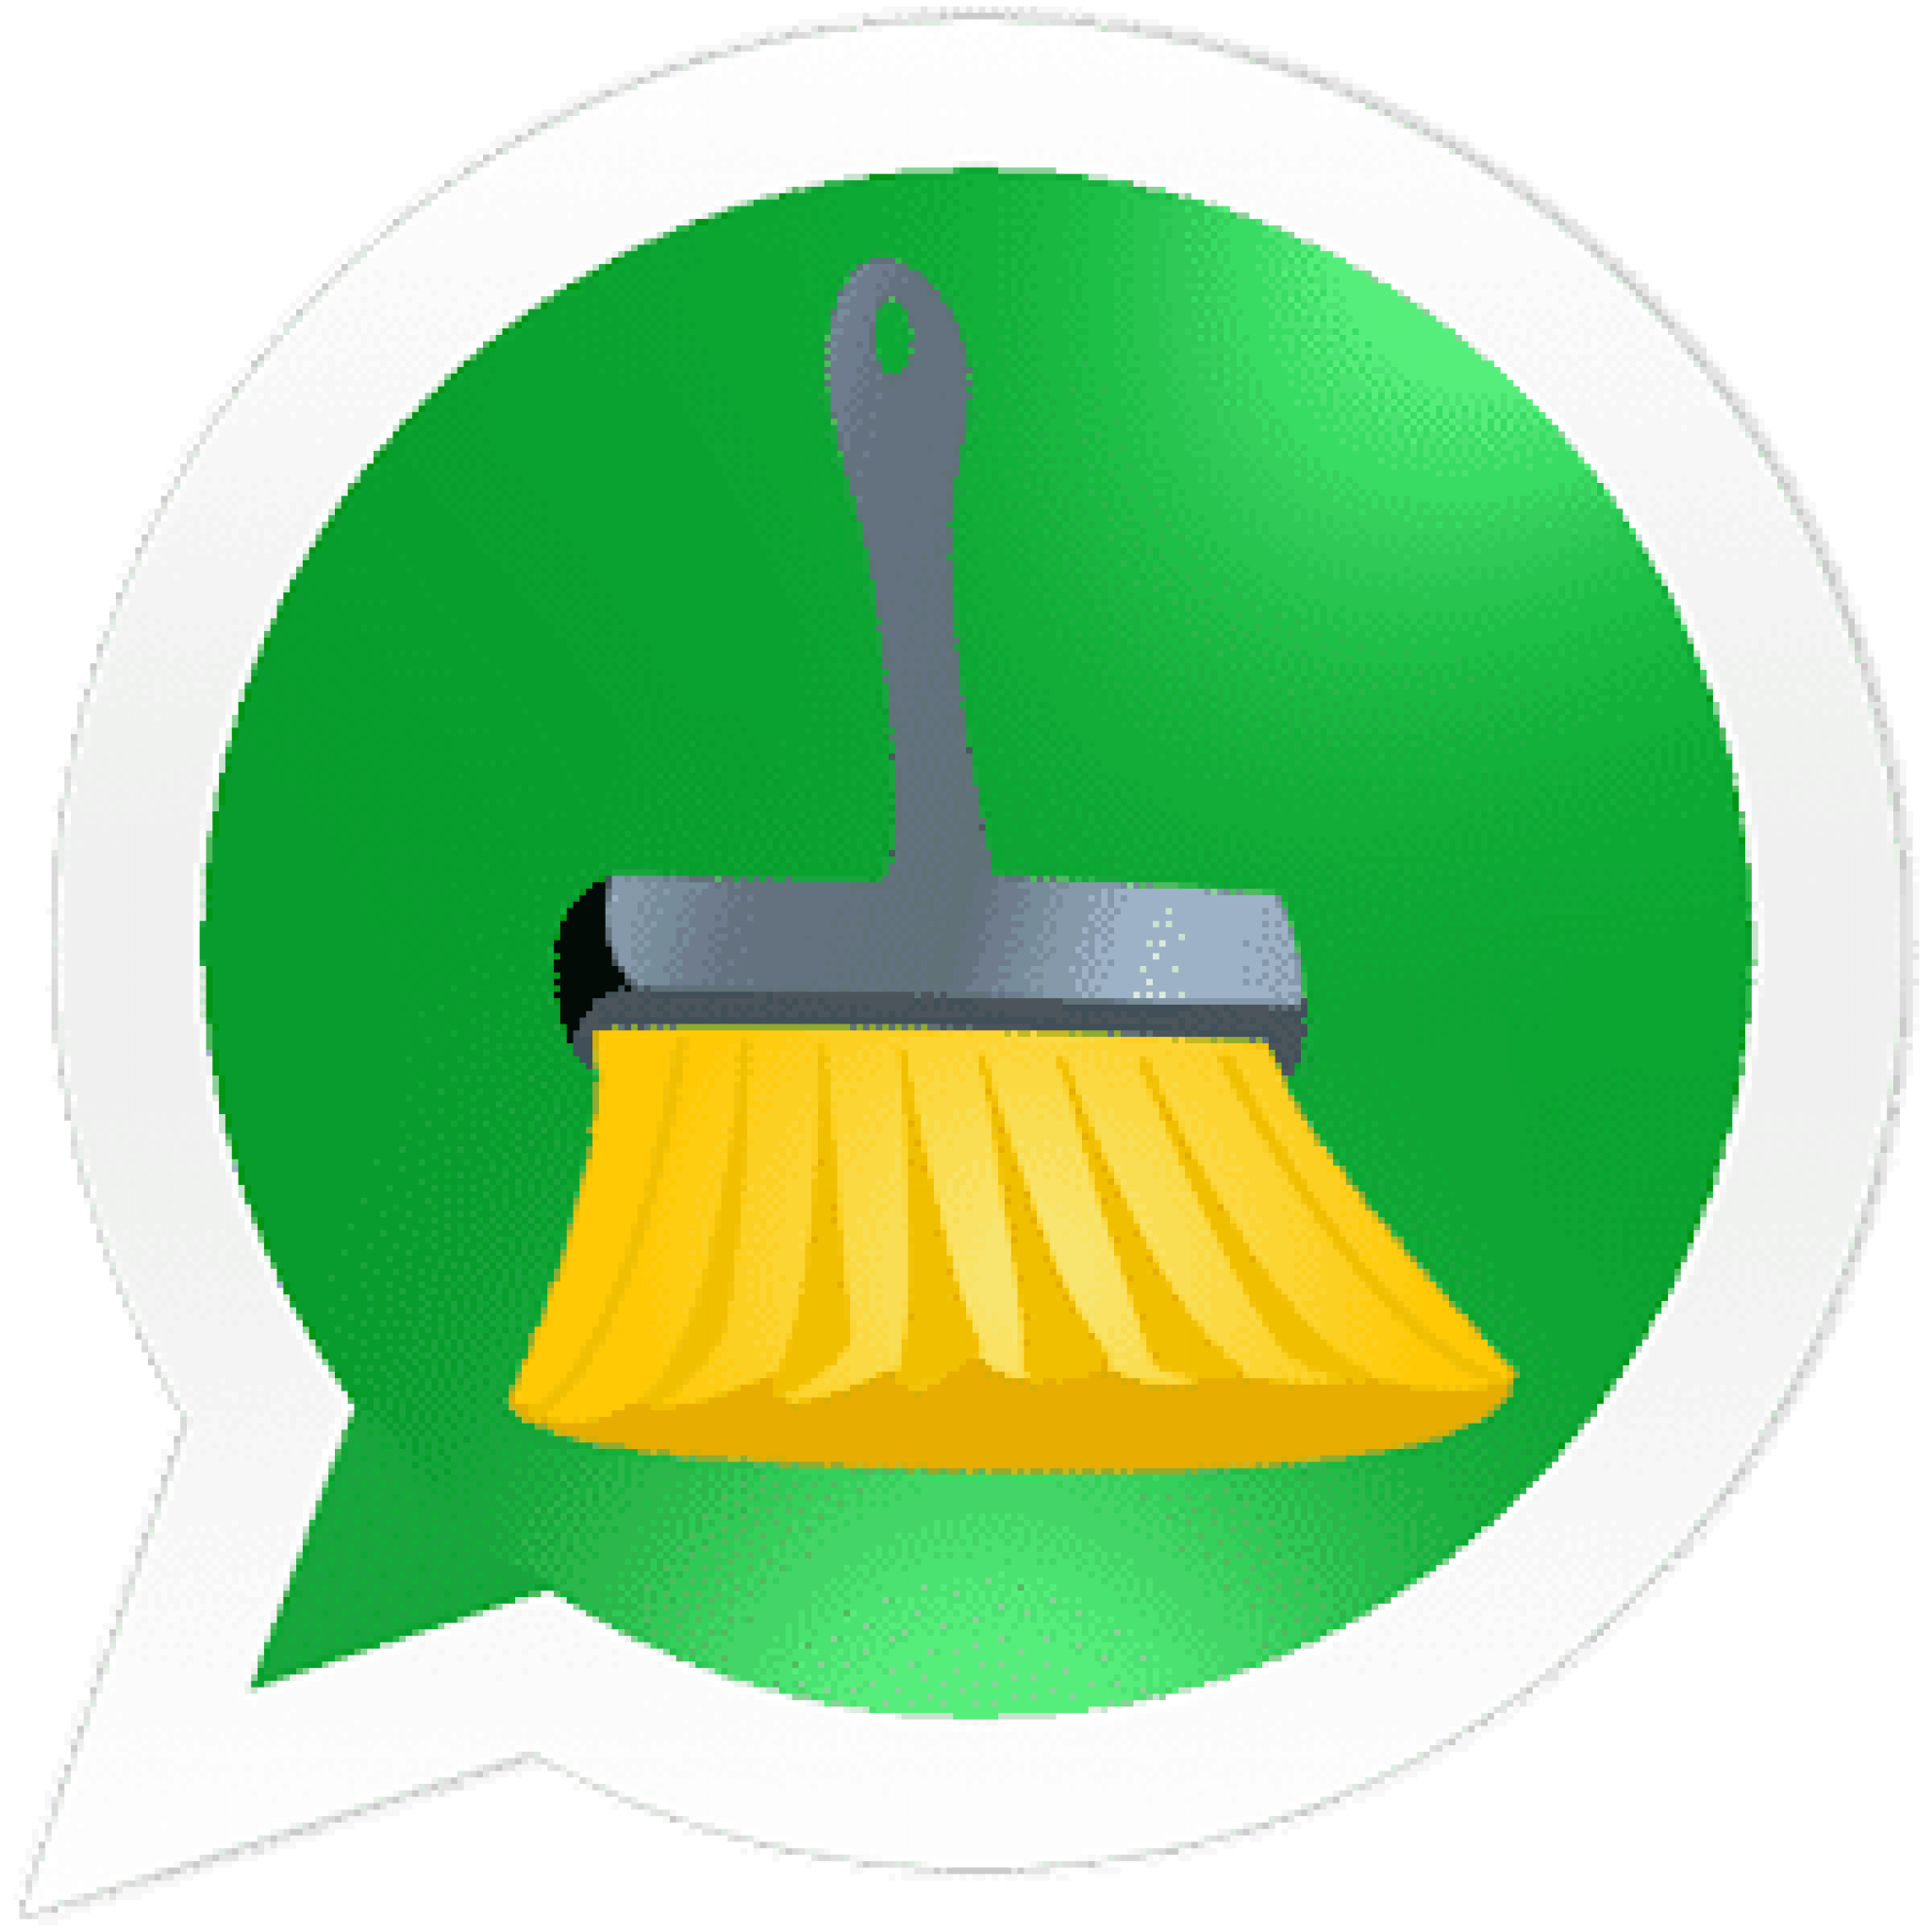 Wcleaner: Limpiando La Basura De Whatsapp